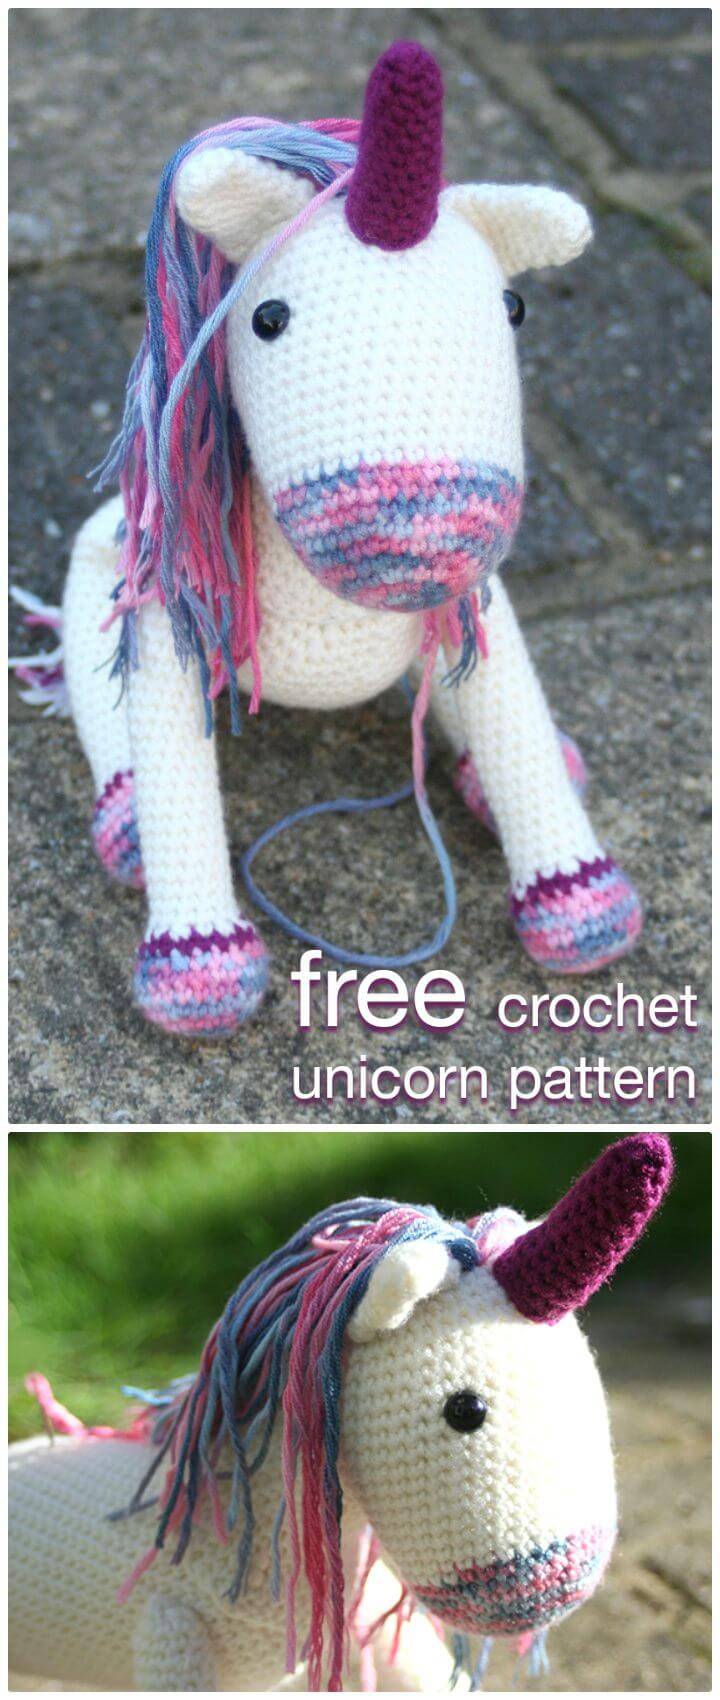 How To Free Crochet Unicorn Pattern